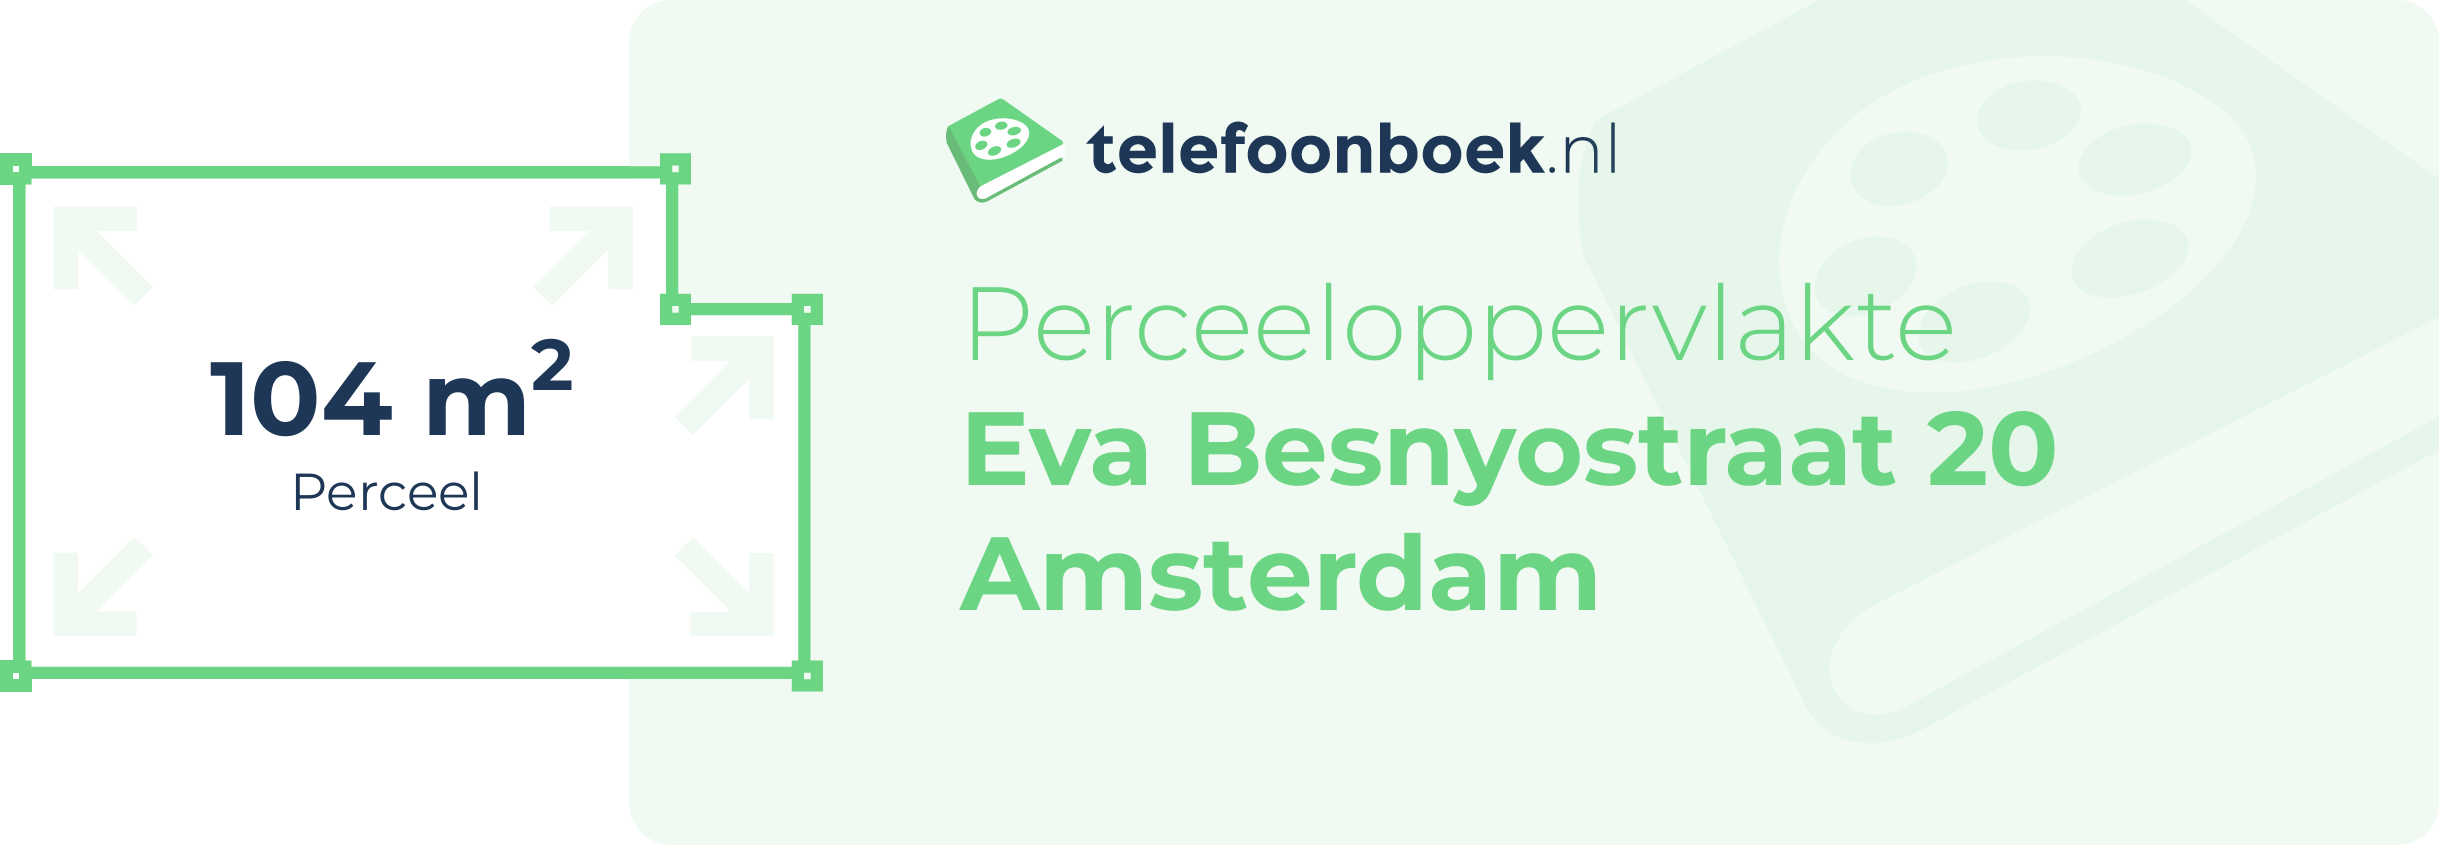 Perceeloppervlakte Eva Besnyostraat 20 Amsterdam